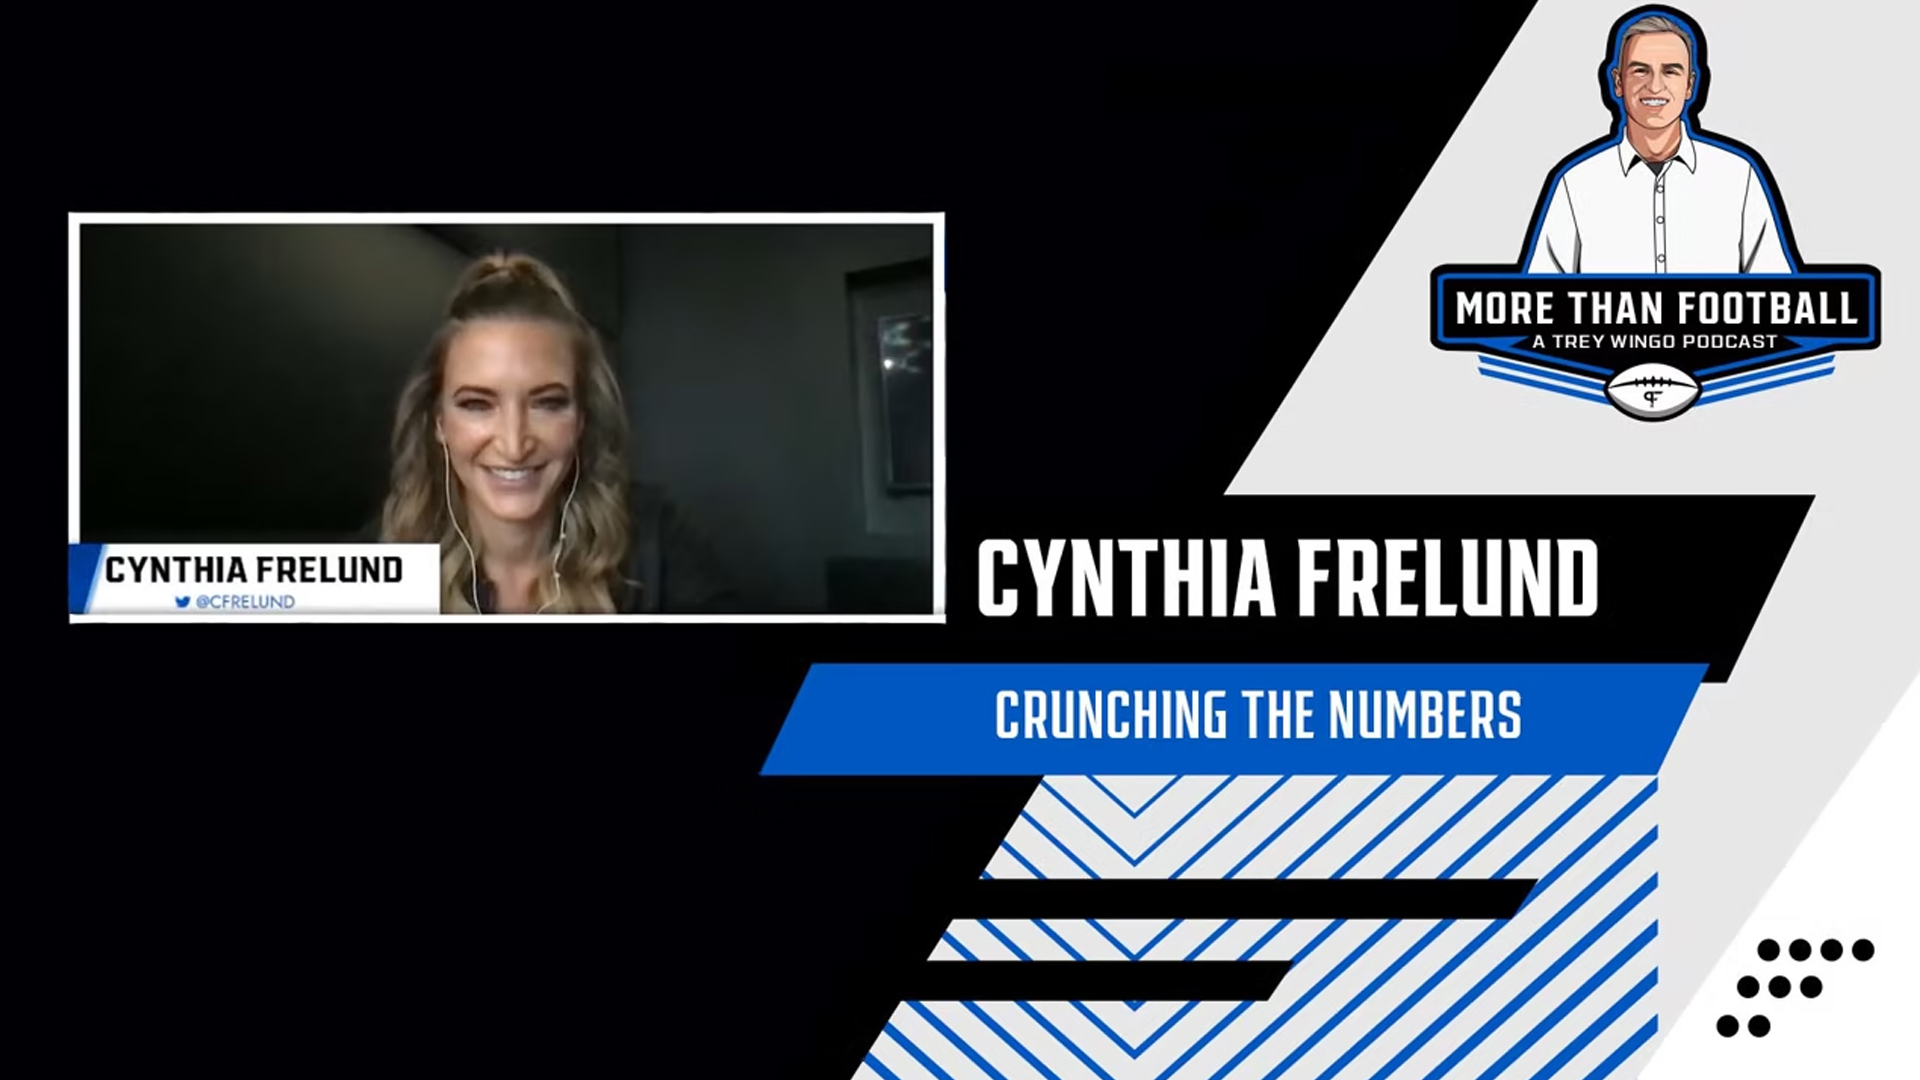 cynthia frelund fantasy football rankings